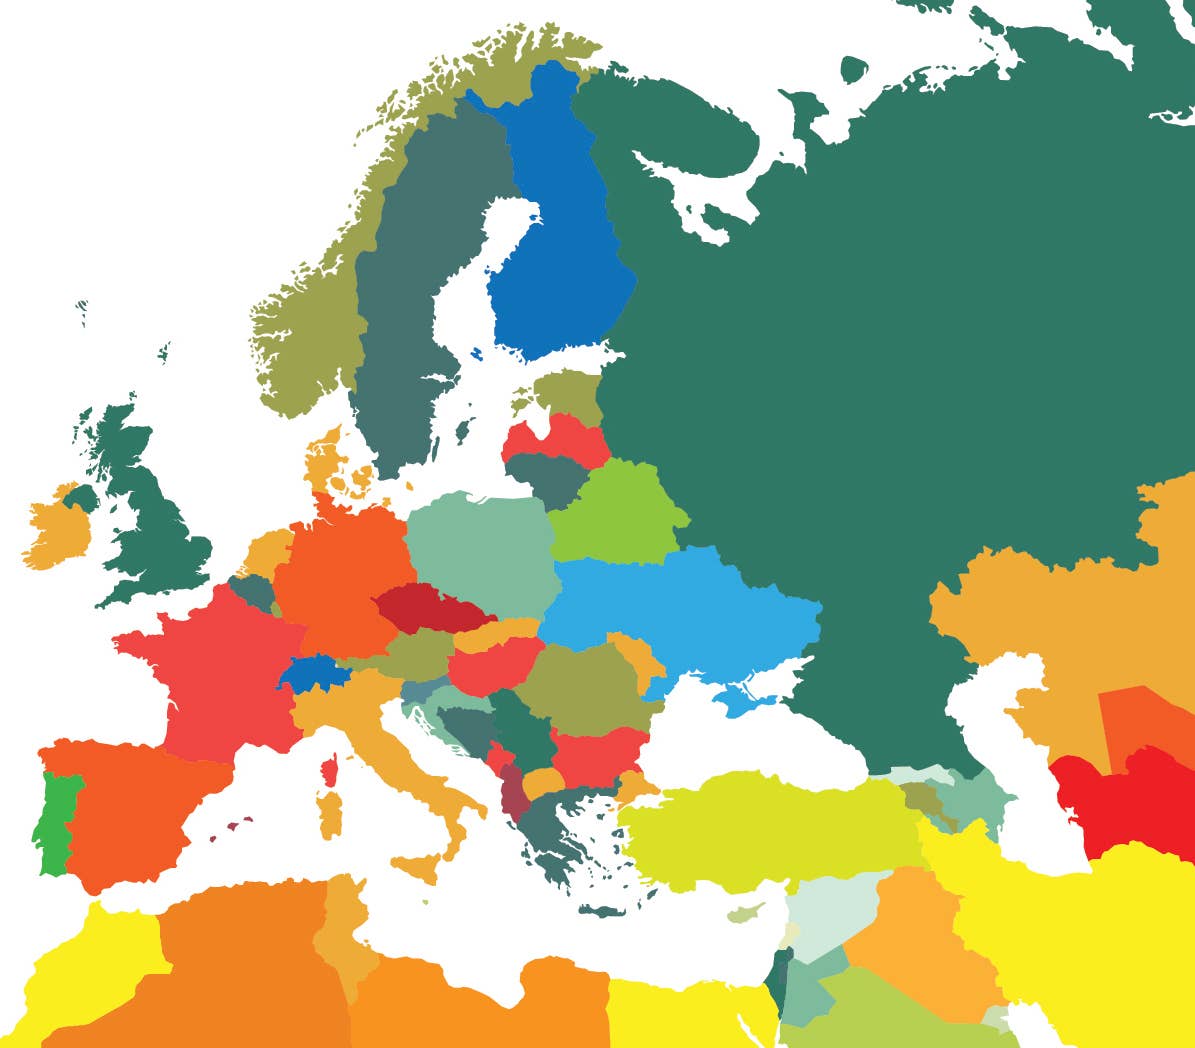 Europe Map Quiz. 50 Стран. People in European Countries. Шаблон география население Европа.